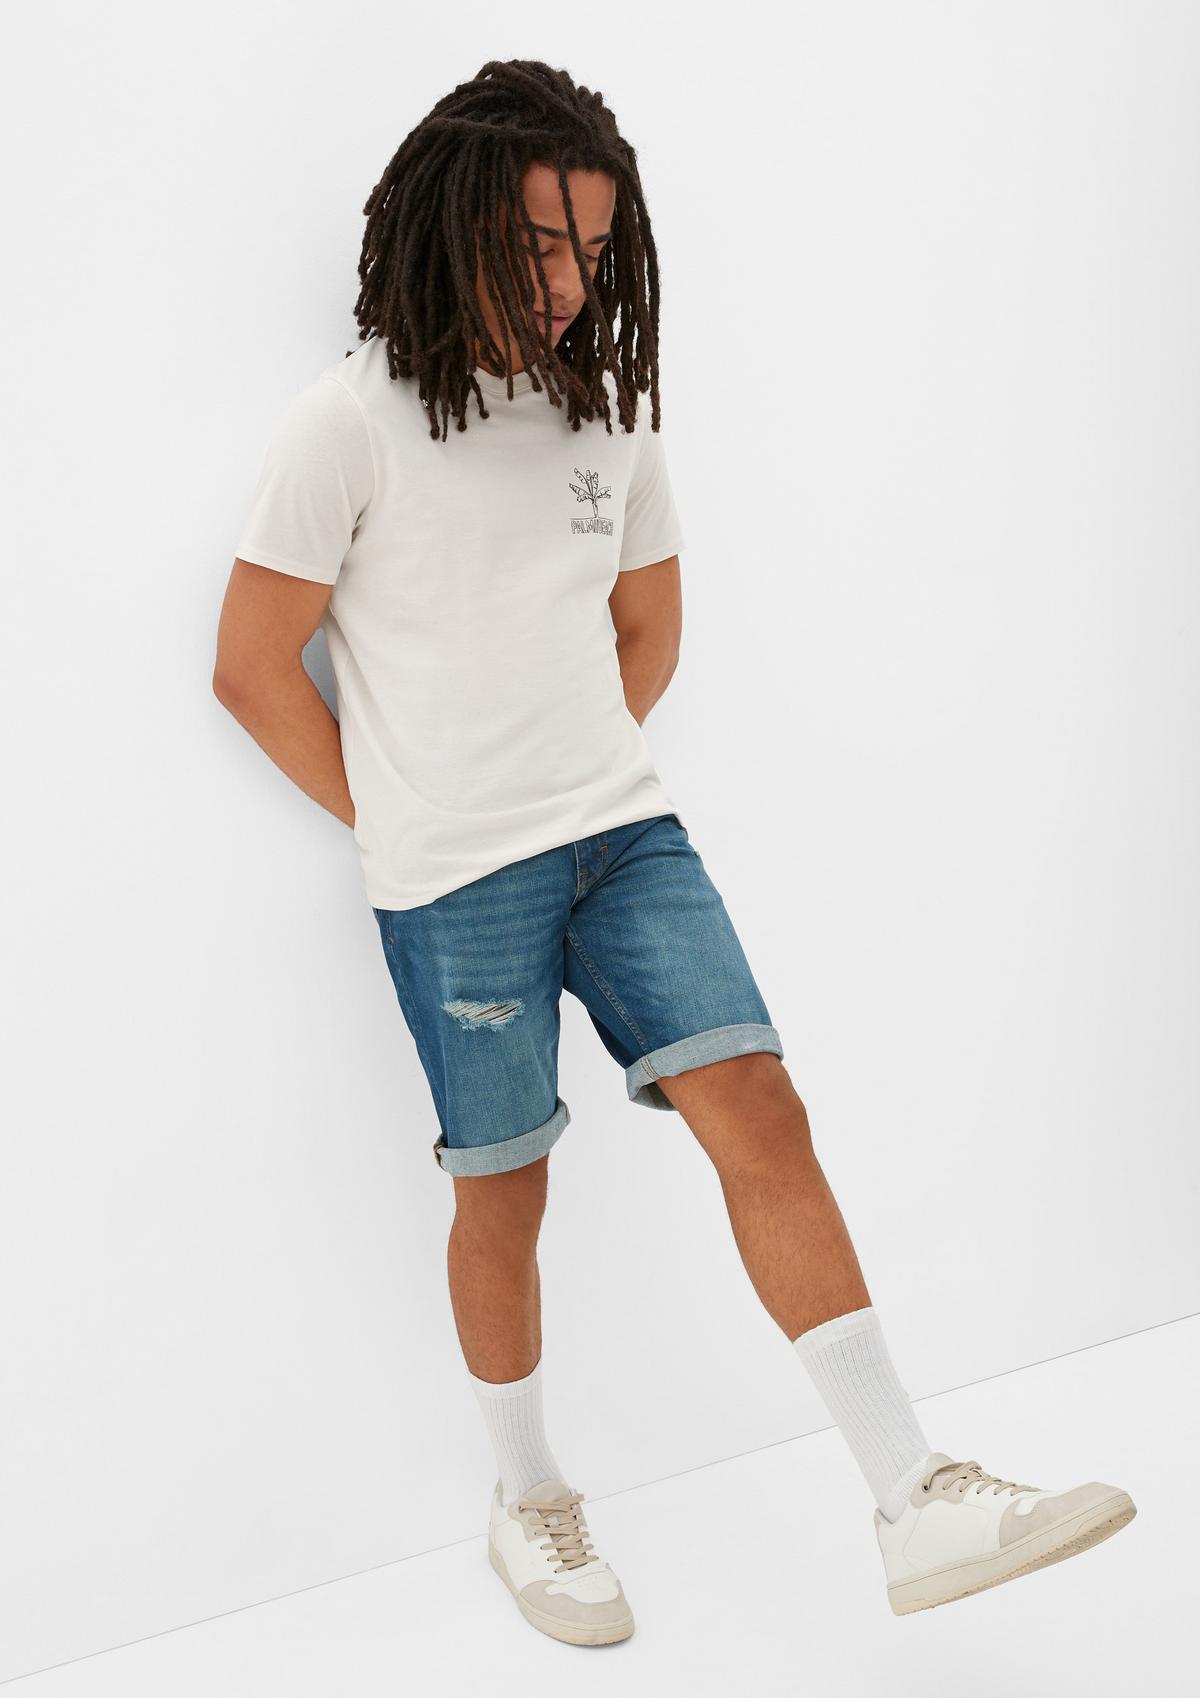 s.Oliver Jeans-Shorts John / Regular Fit / Mid Rise / Straight Leg